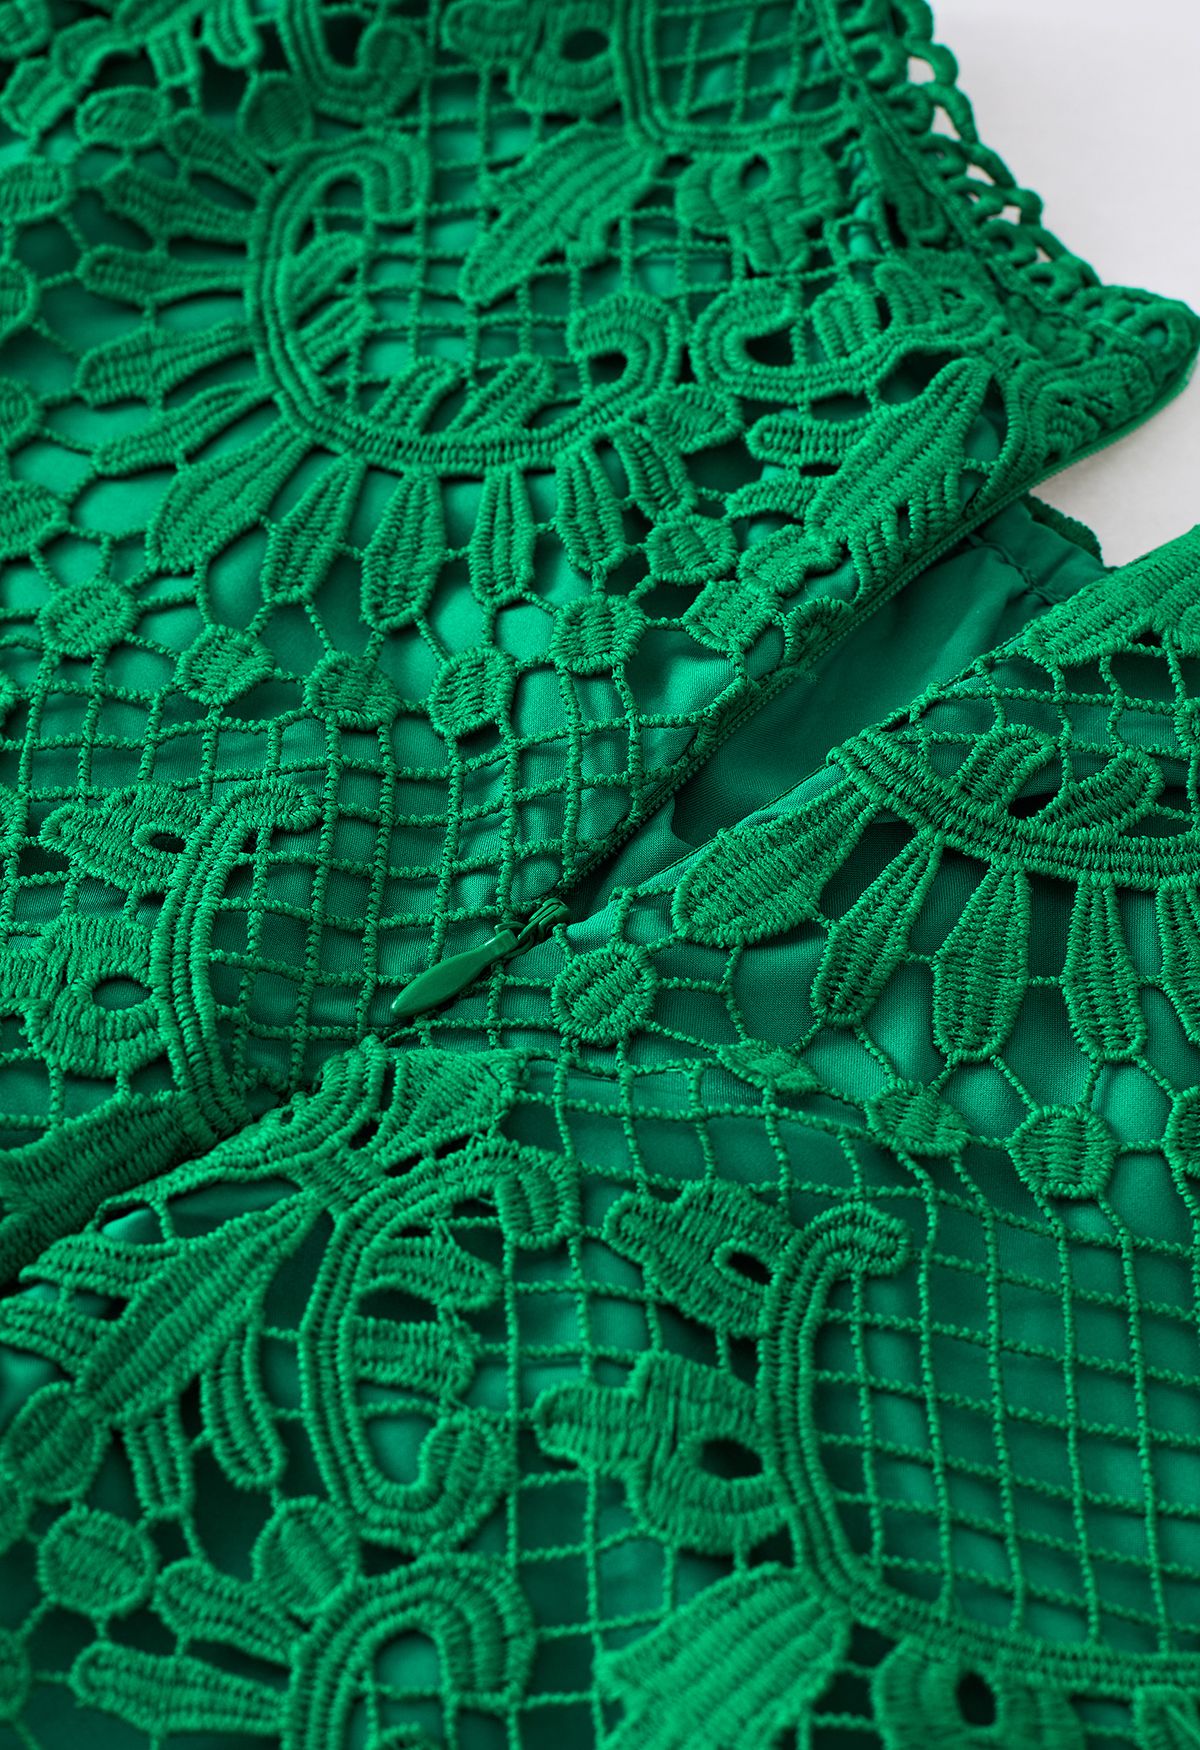 Scallop Edge Bubble Sleeve Crochet Top in Green